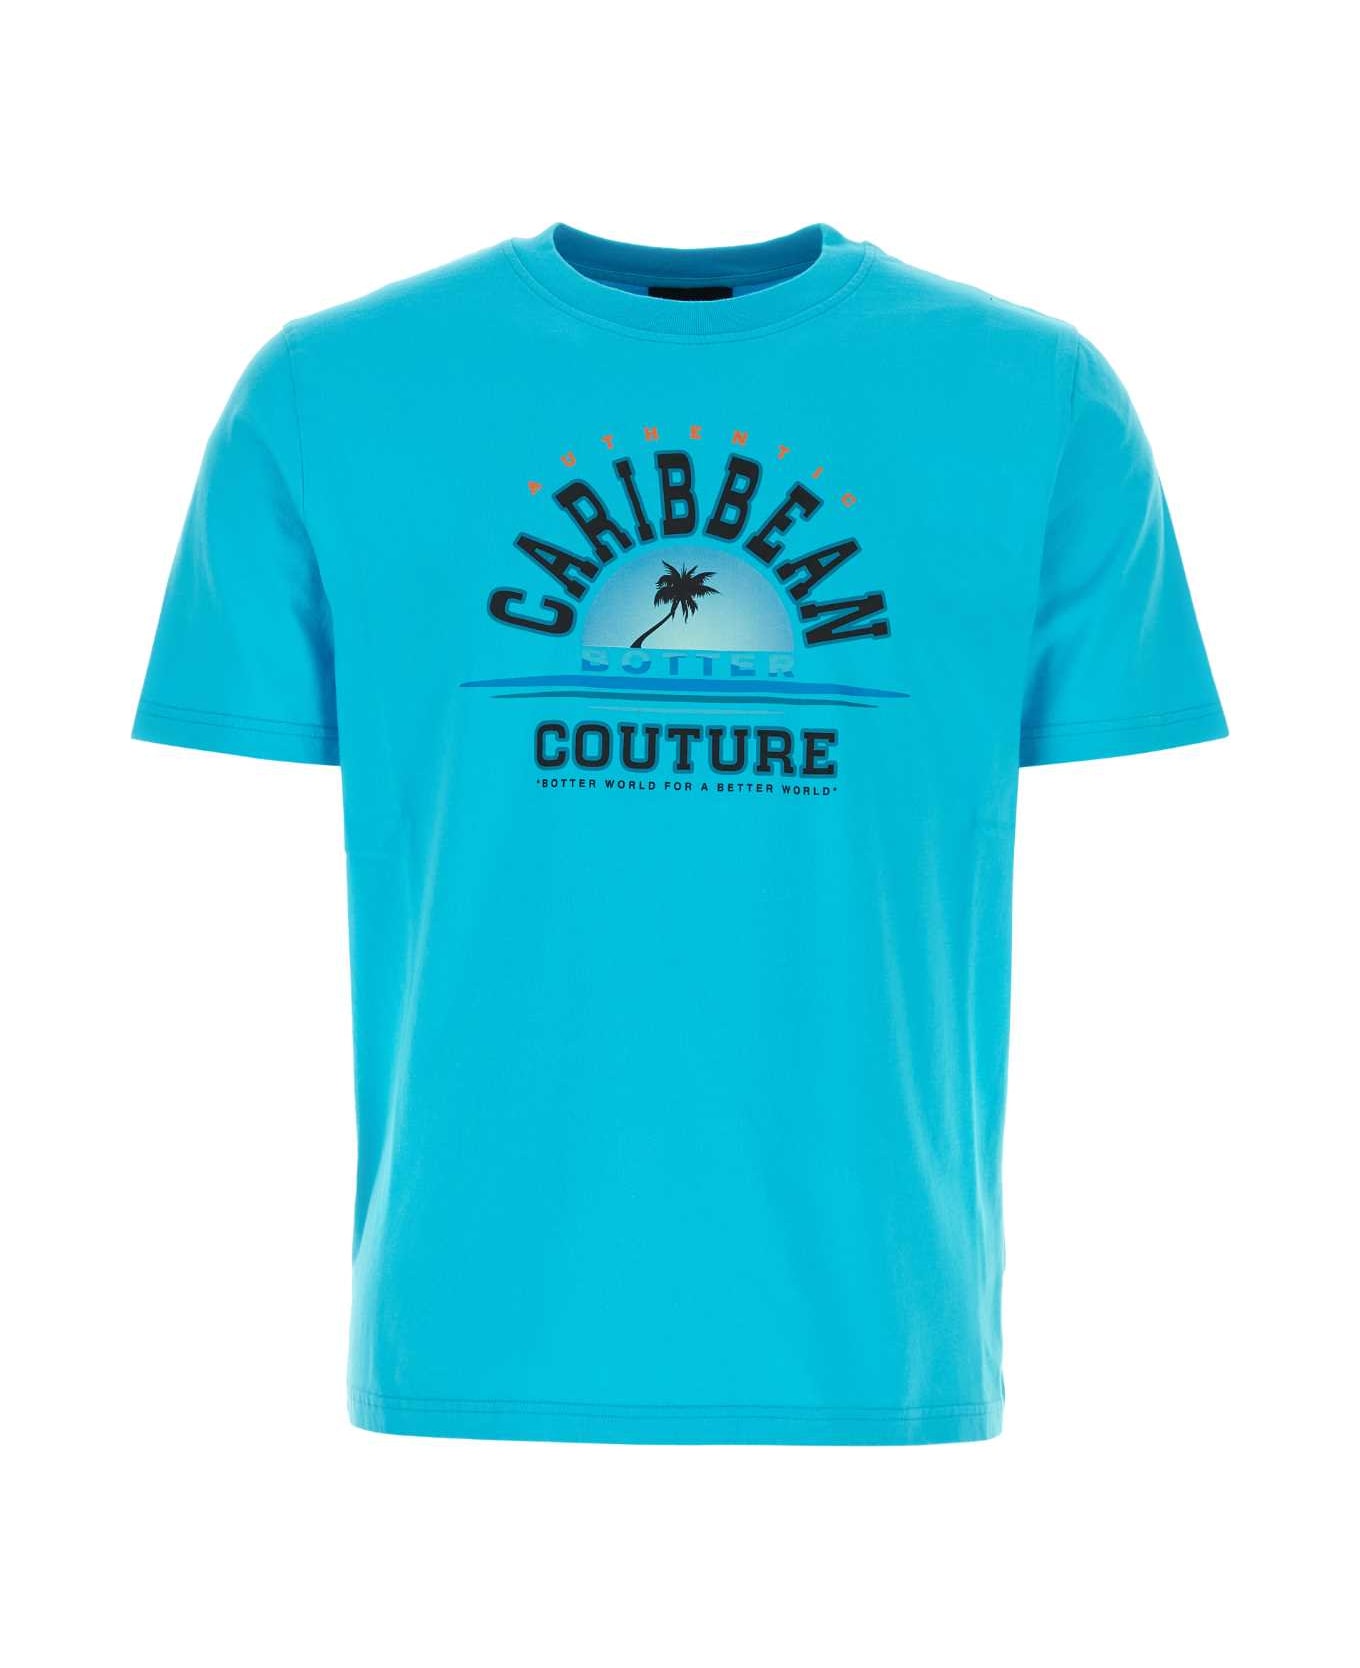 Botter Turquoise Cotton T-shirt - BOTTERBLUE